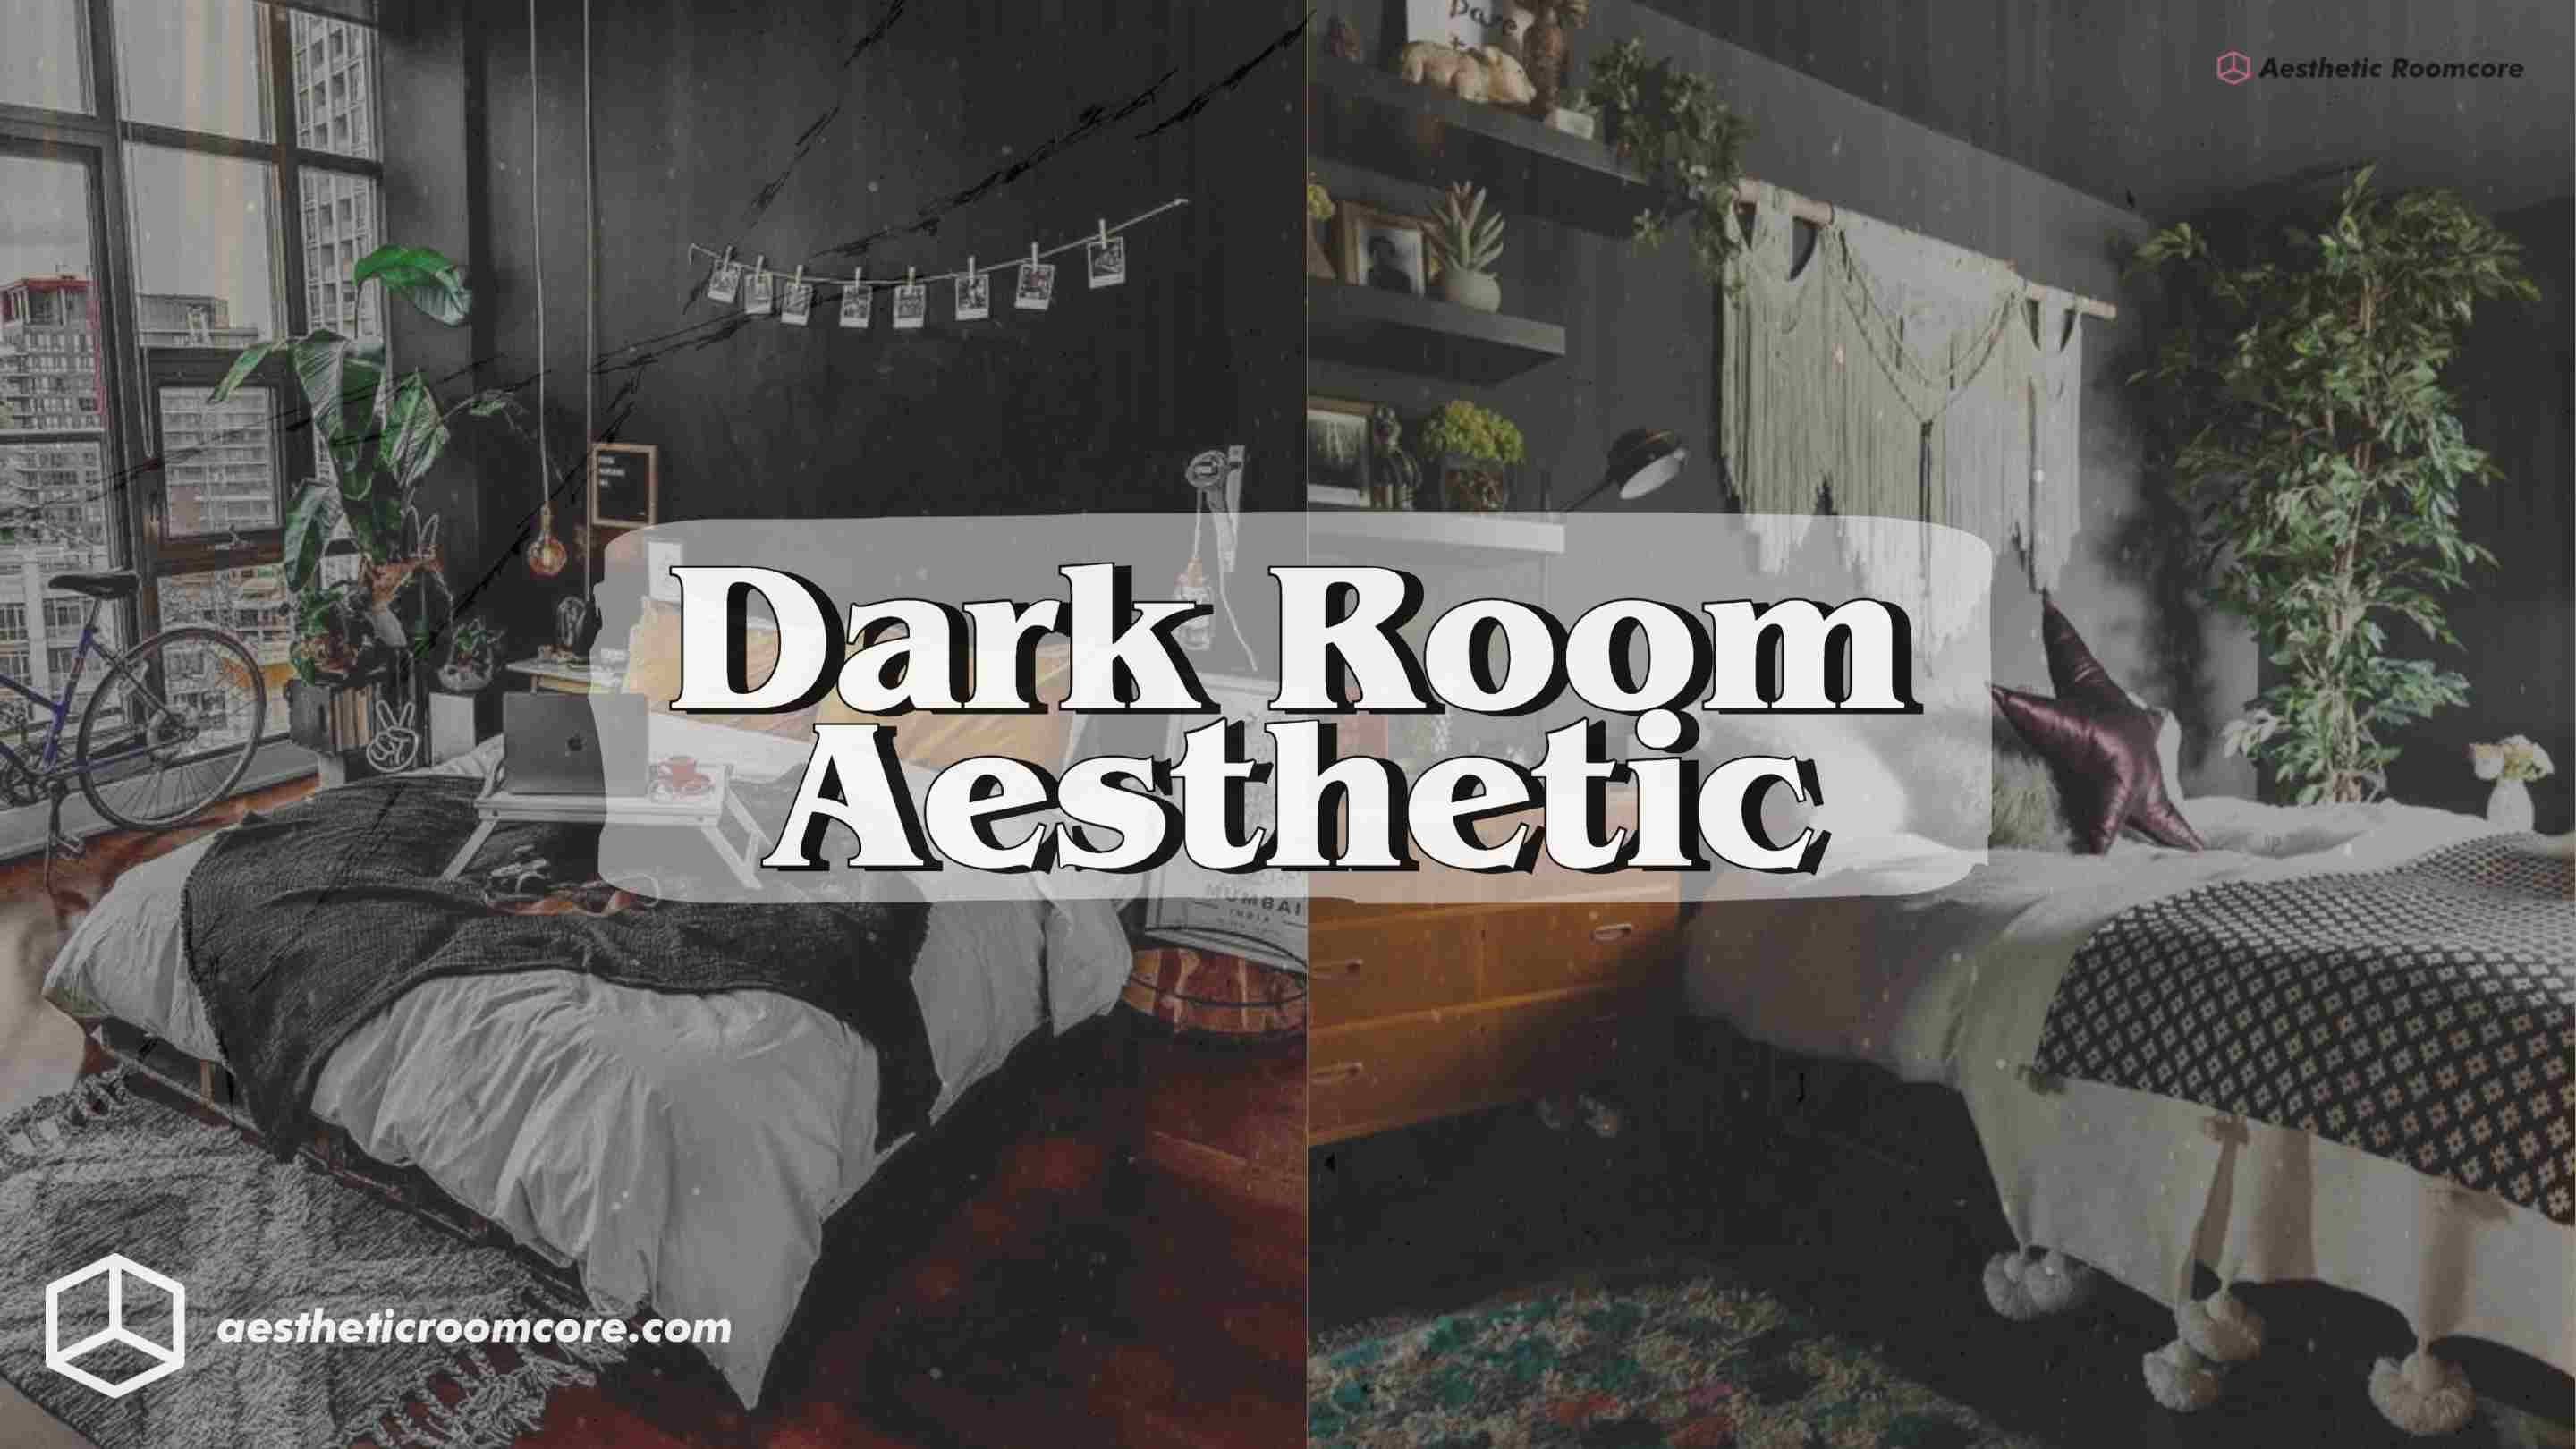 Dark Room Aesthetic | Dark Bedroom Decor Ideas | Aesthetic Roomcore